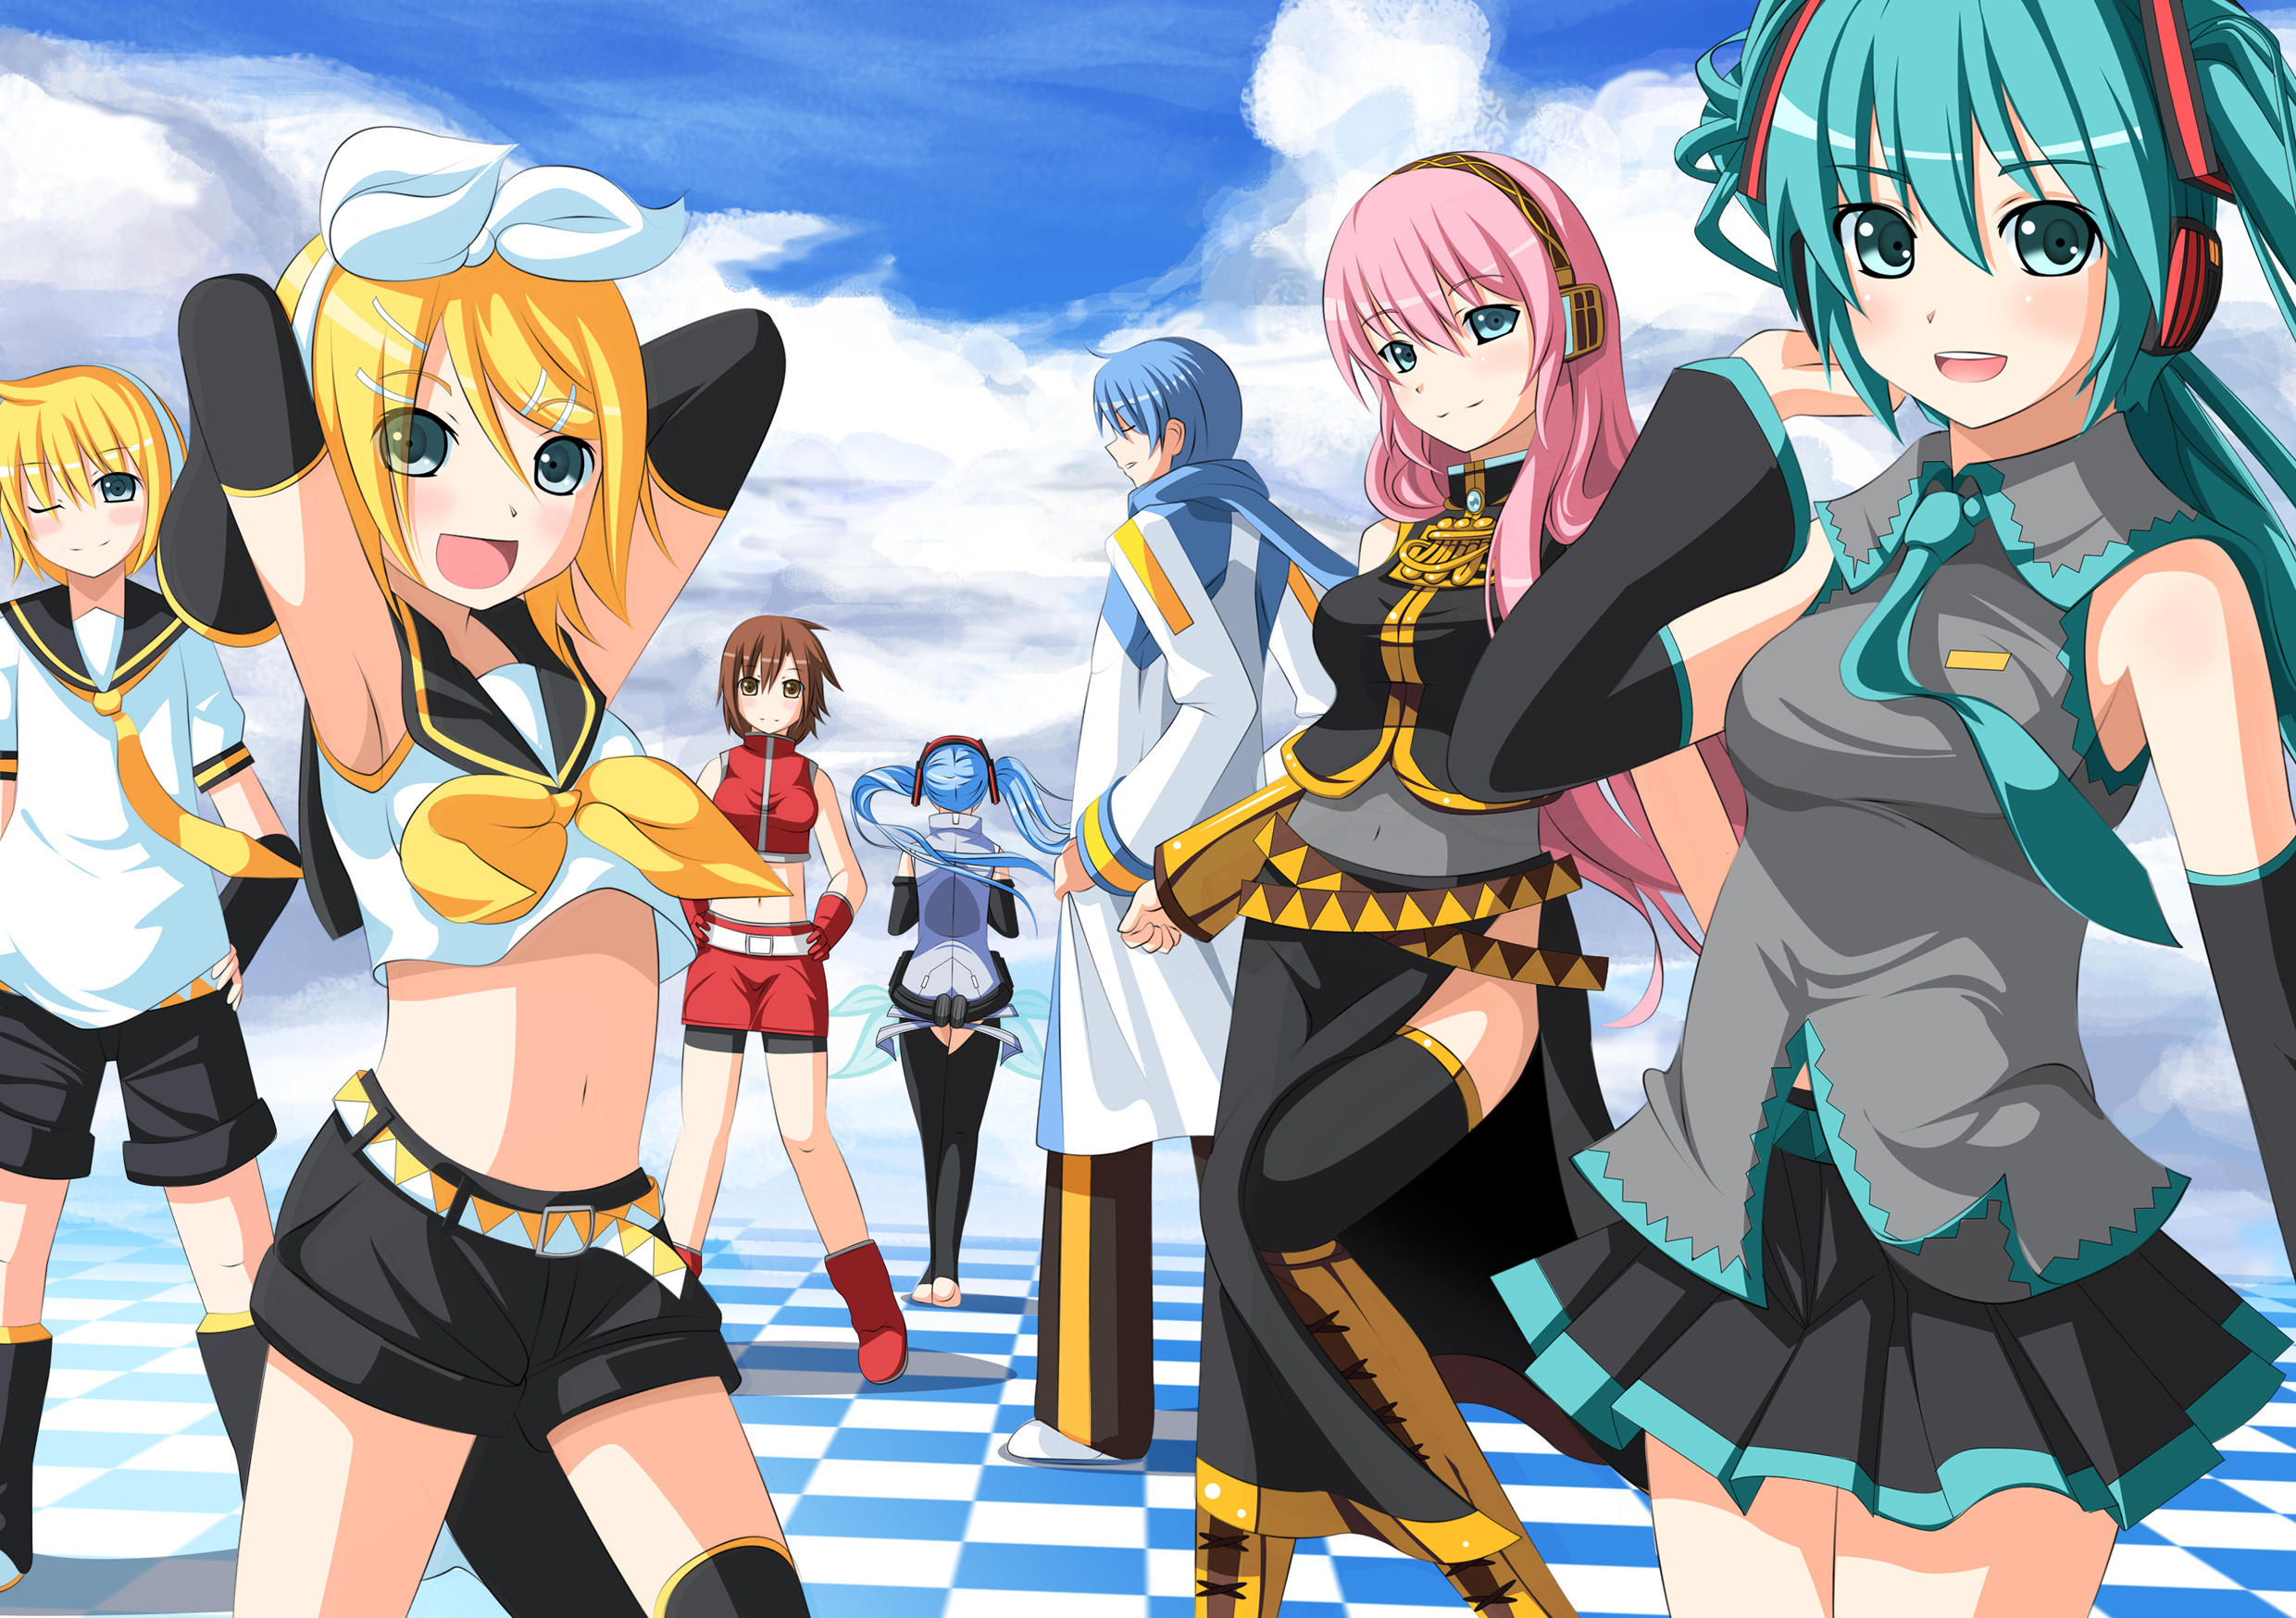 Descarga gratis la imagen Vocaloid, Luka Megurine, Animado, Hatsune Miku, Rin Kagamine, Kaito (Vocaloid), Len Kagamine, Meiko (Vocaloid) en el escritorio de tu PC